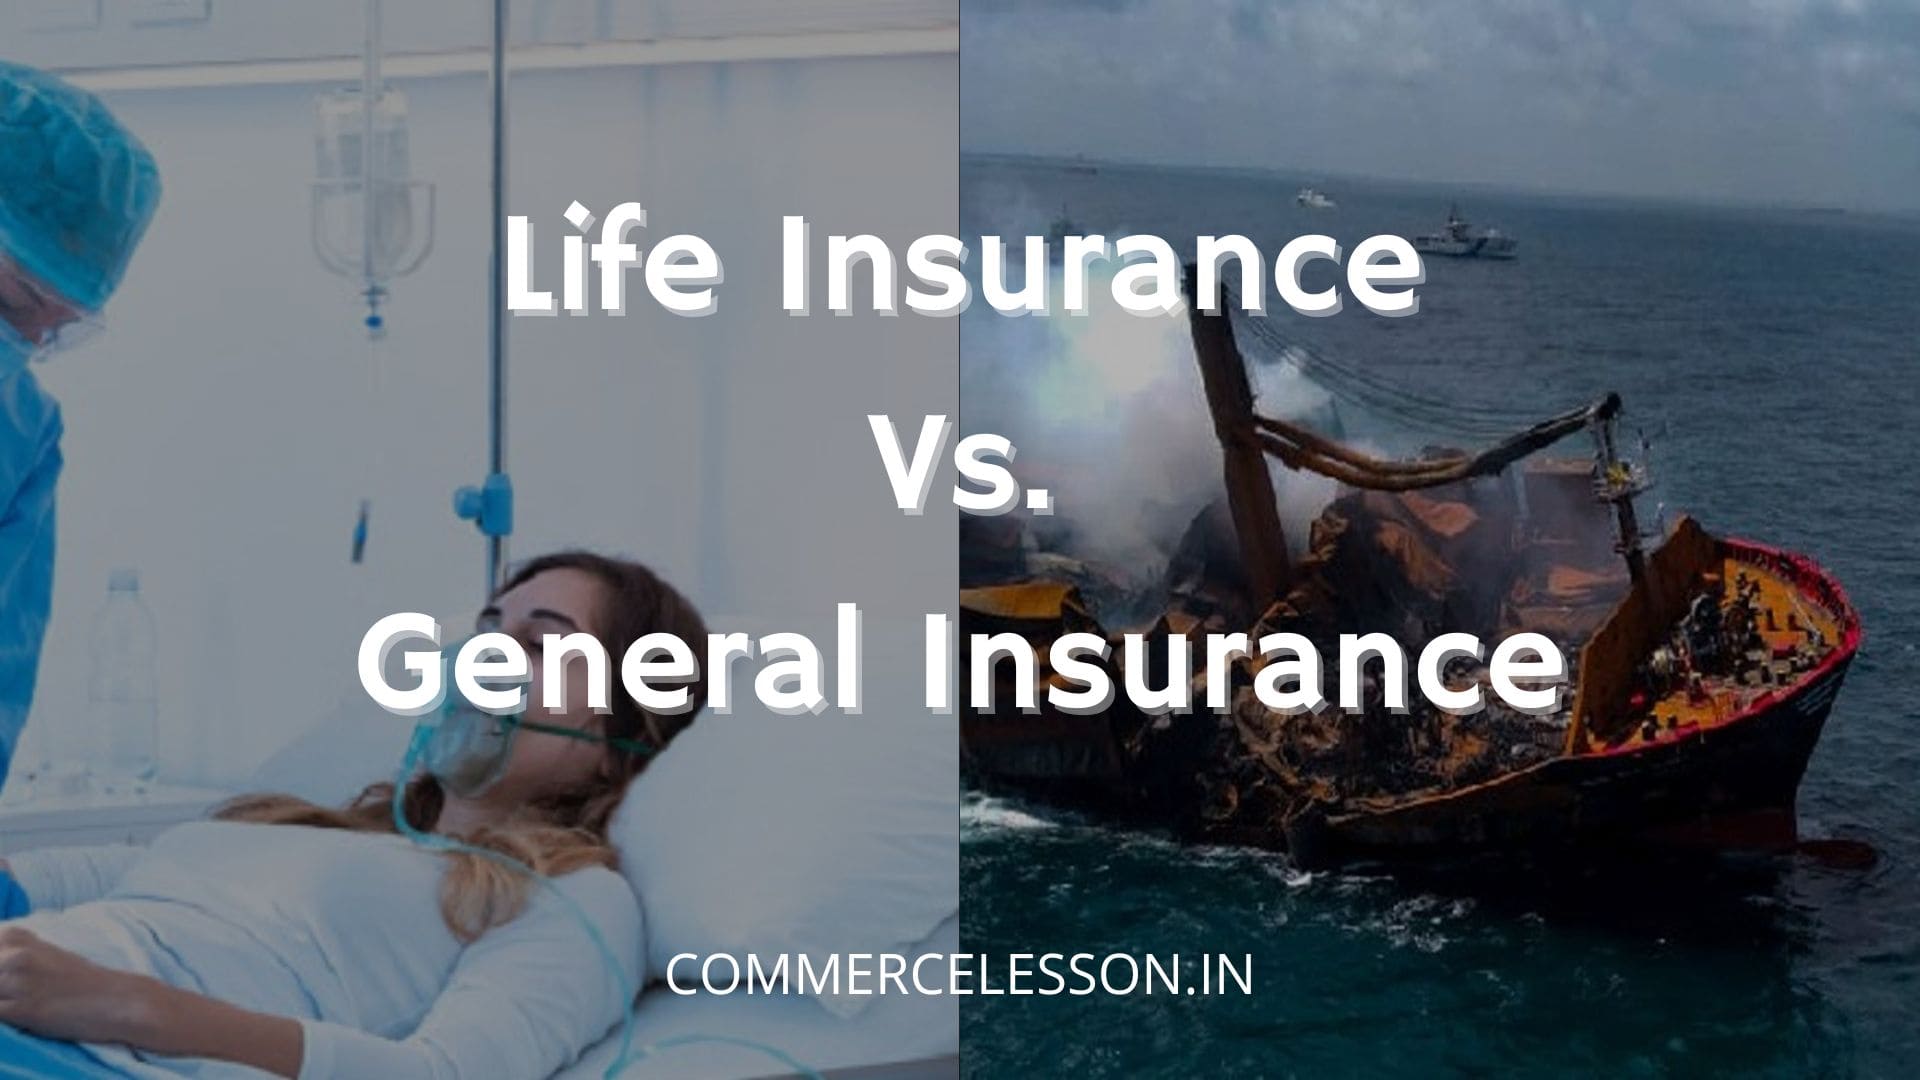 Distinguish between Life Insurance and General Insurance